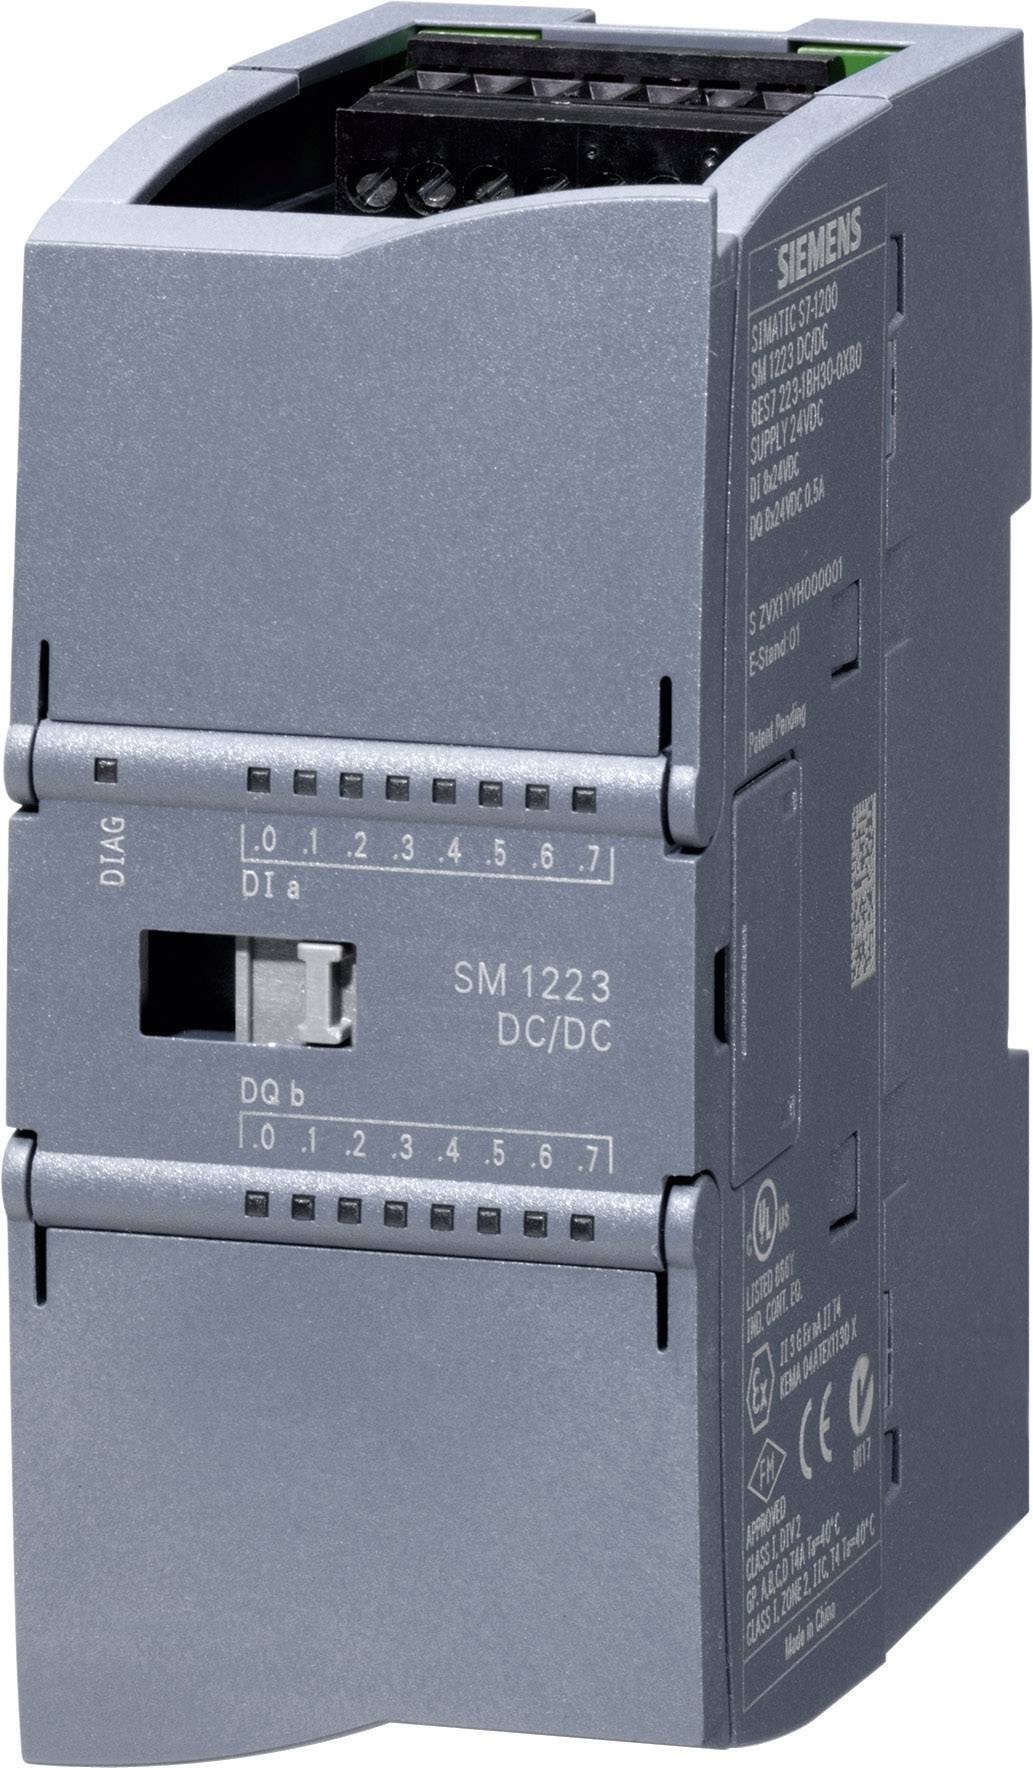 Siemens SM 1223 6ES7223-1BL32-0XB0 PLC digital I/O module 28.8 V